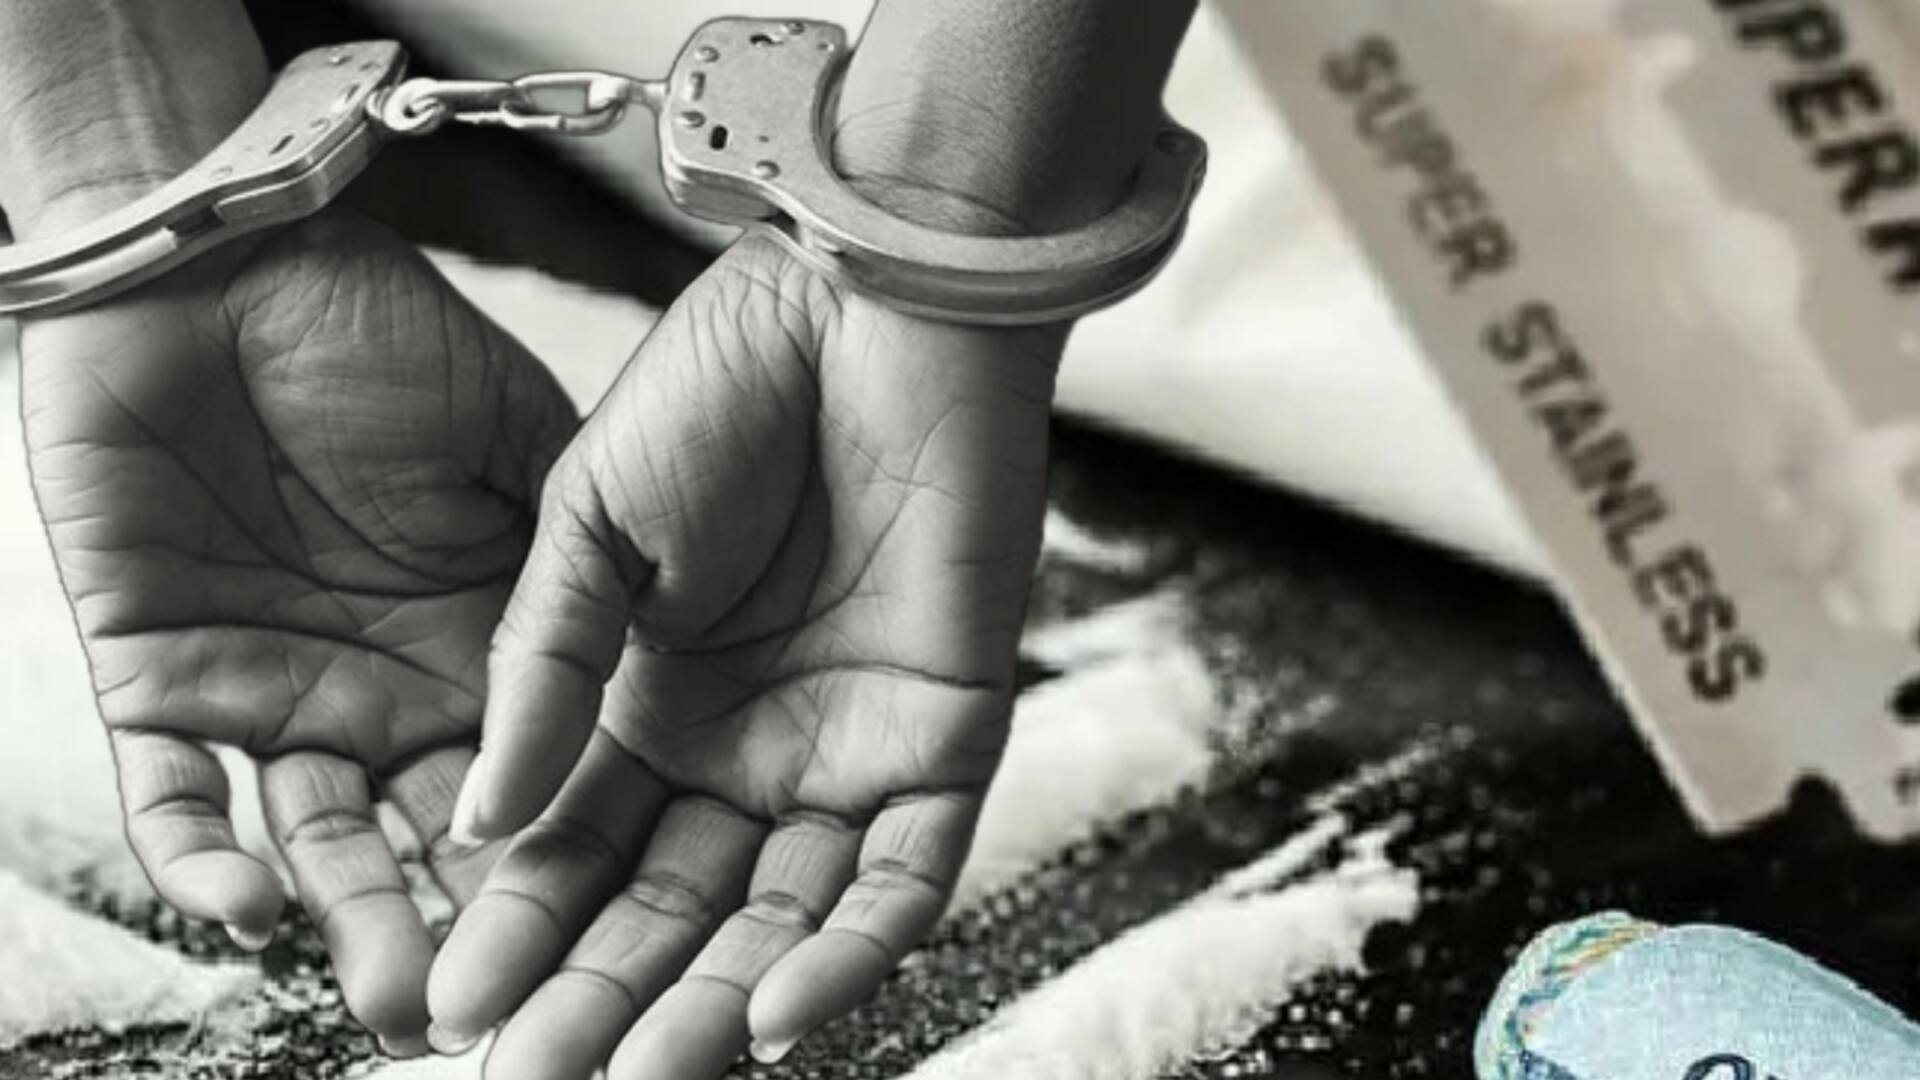 Drugs: గచ్చిబౌలి స్టార్ హోటల్‌లో డ్రగ్స్ సీజ్.. పోలీసుల అదుపులో ముగ్గురు 